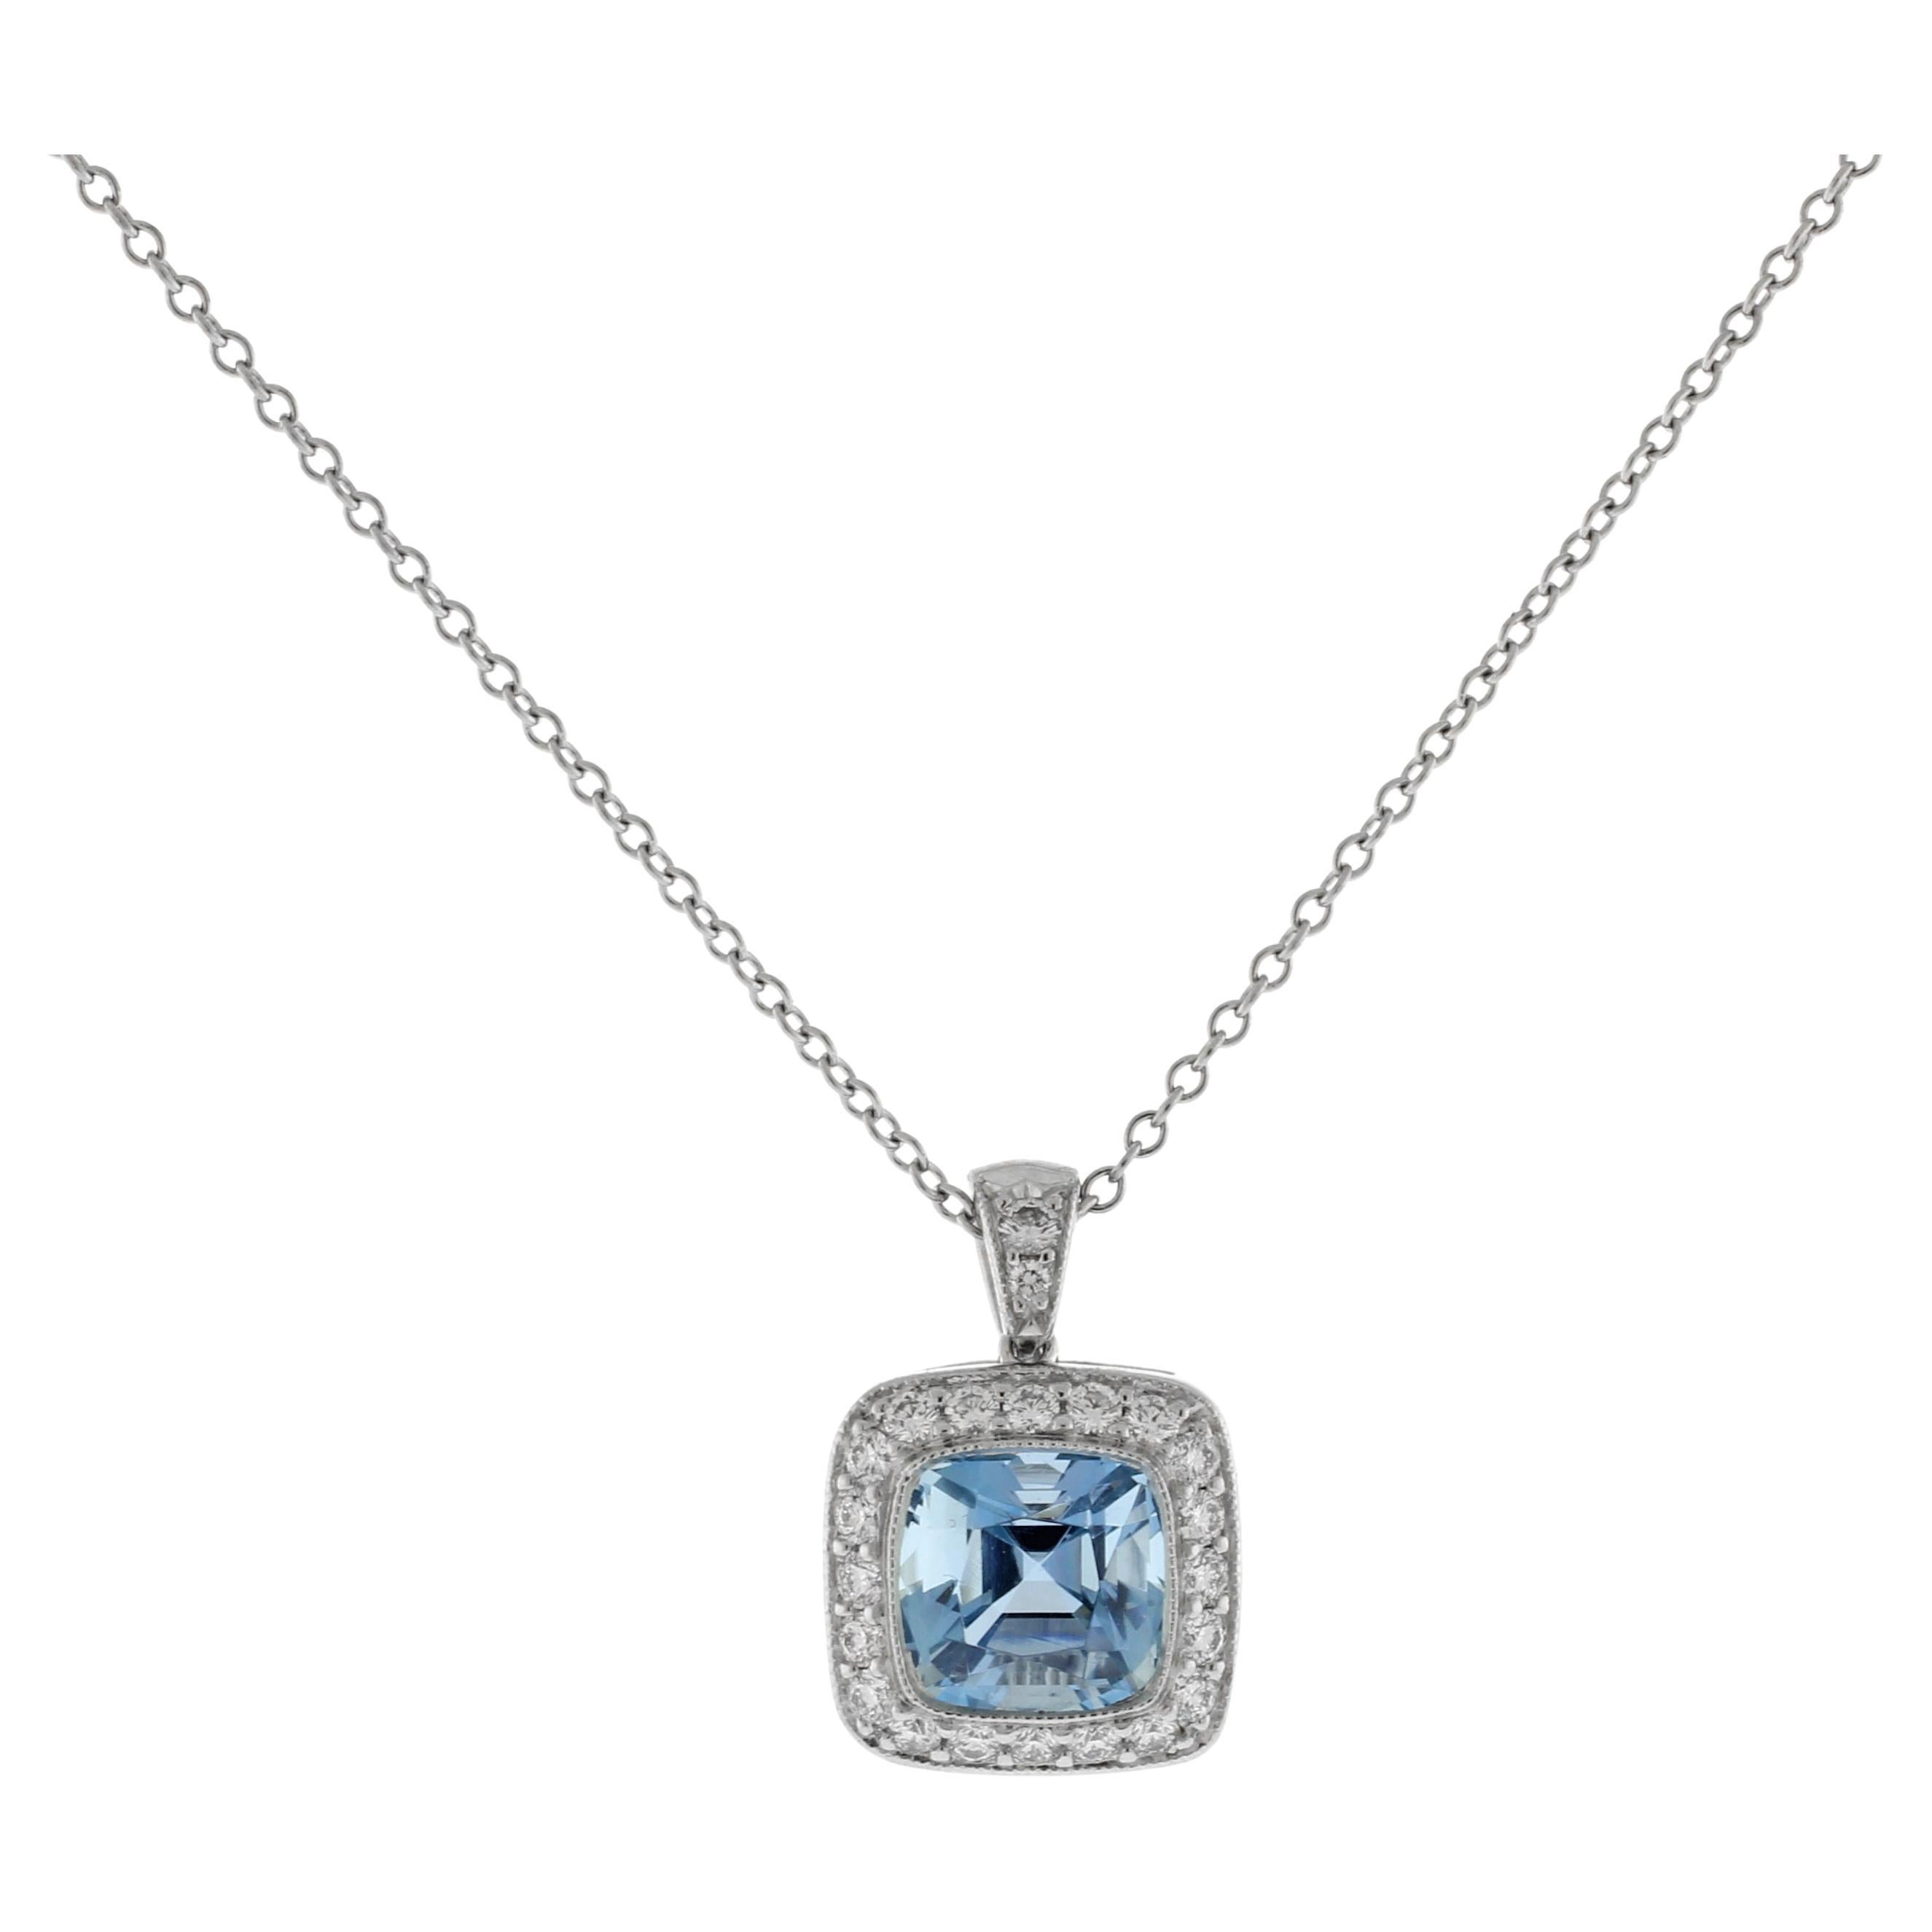 Tiffany & Co. Legacy Collier pendentif aigue-marine et diamant